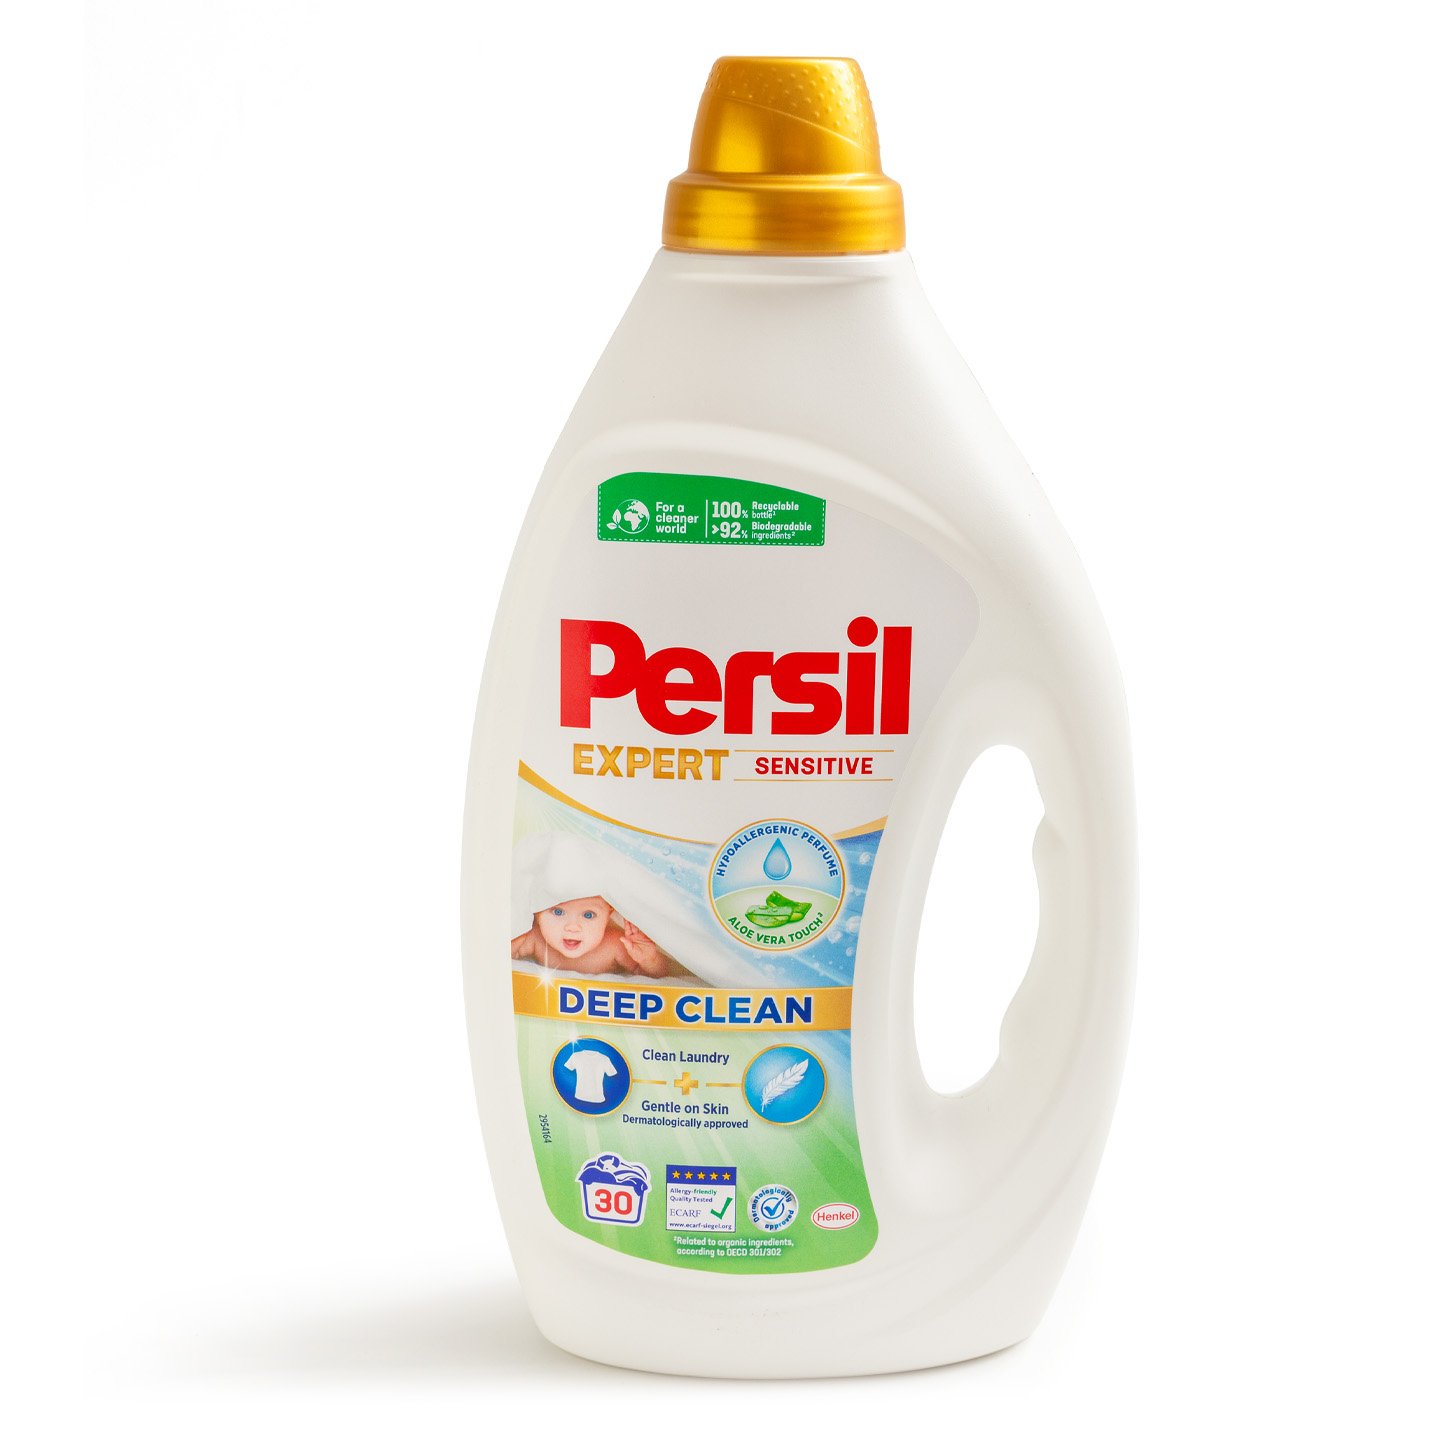 Detergent automat gel Expert Sensitive / Expert Silan / Expert Lavender Persil 1.35L 